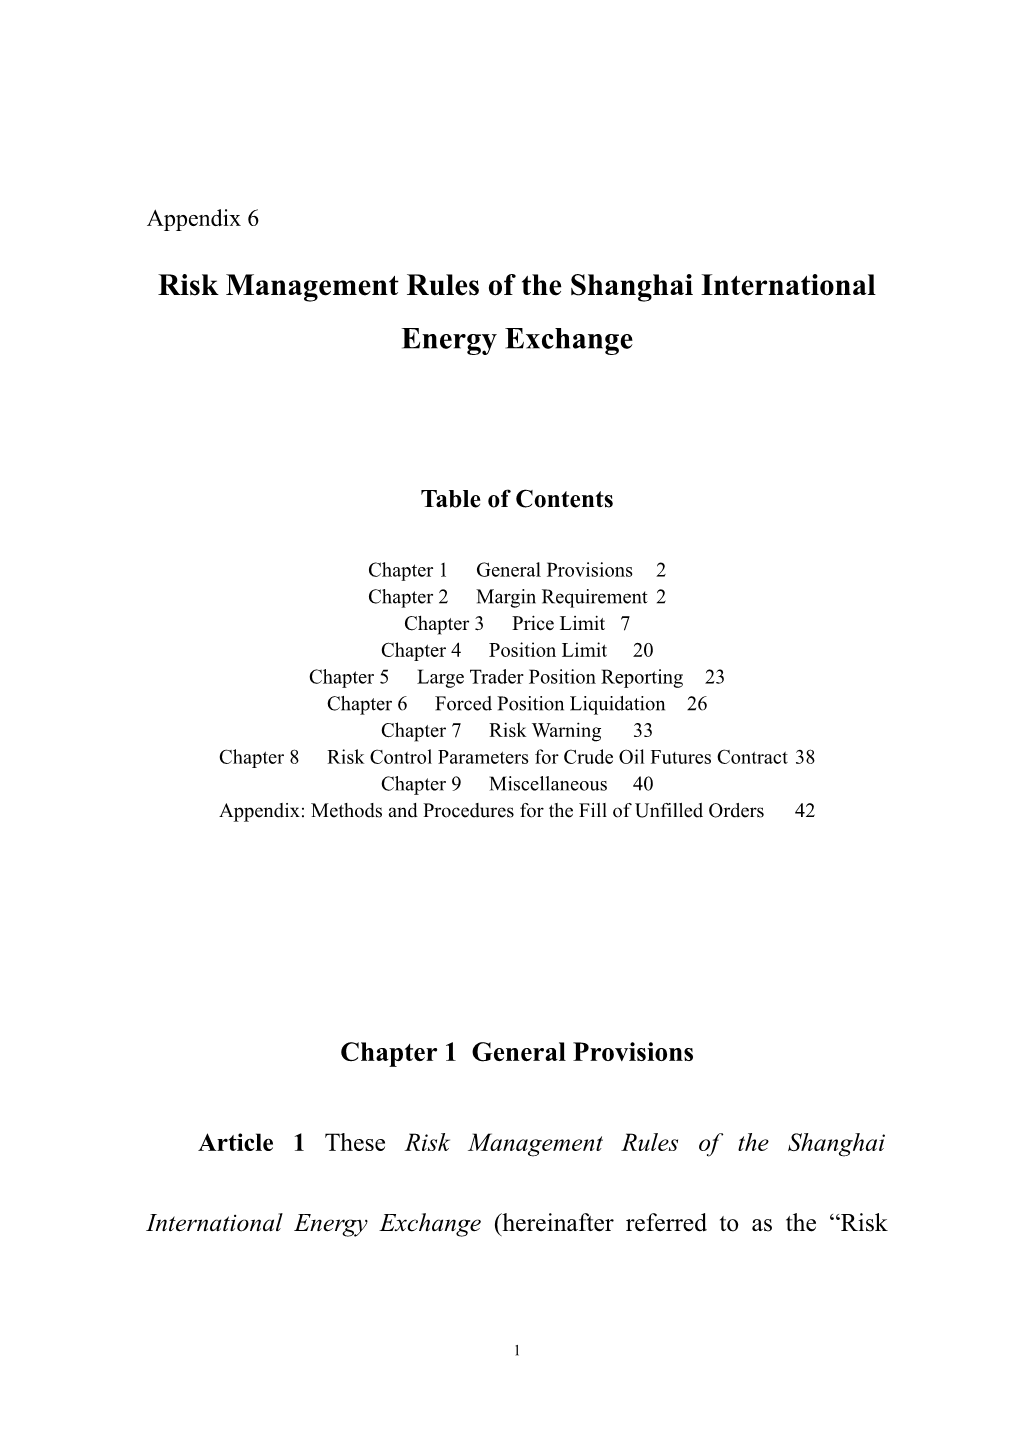 Risk Management Rules of the Shanghai International Energy Exchange